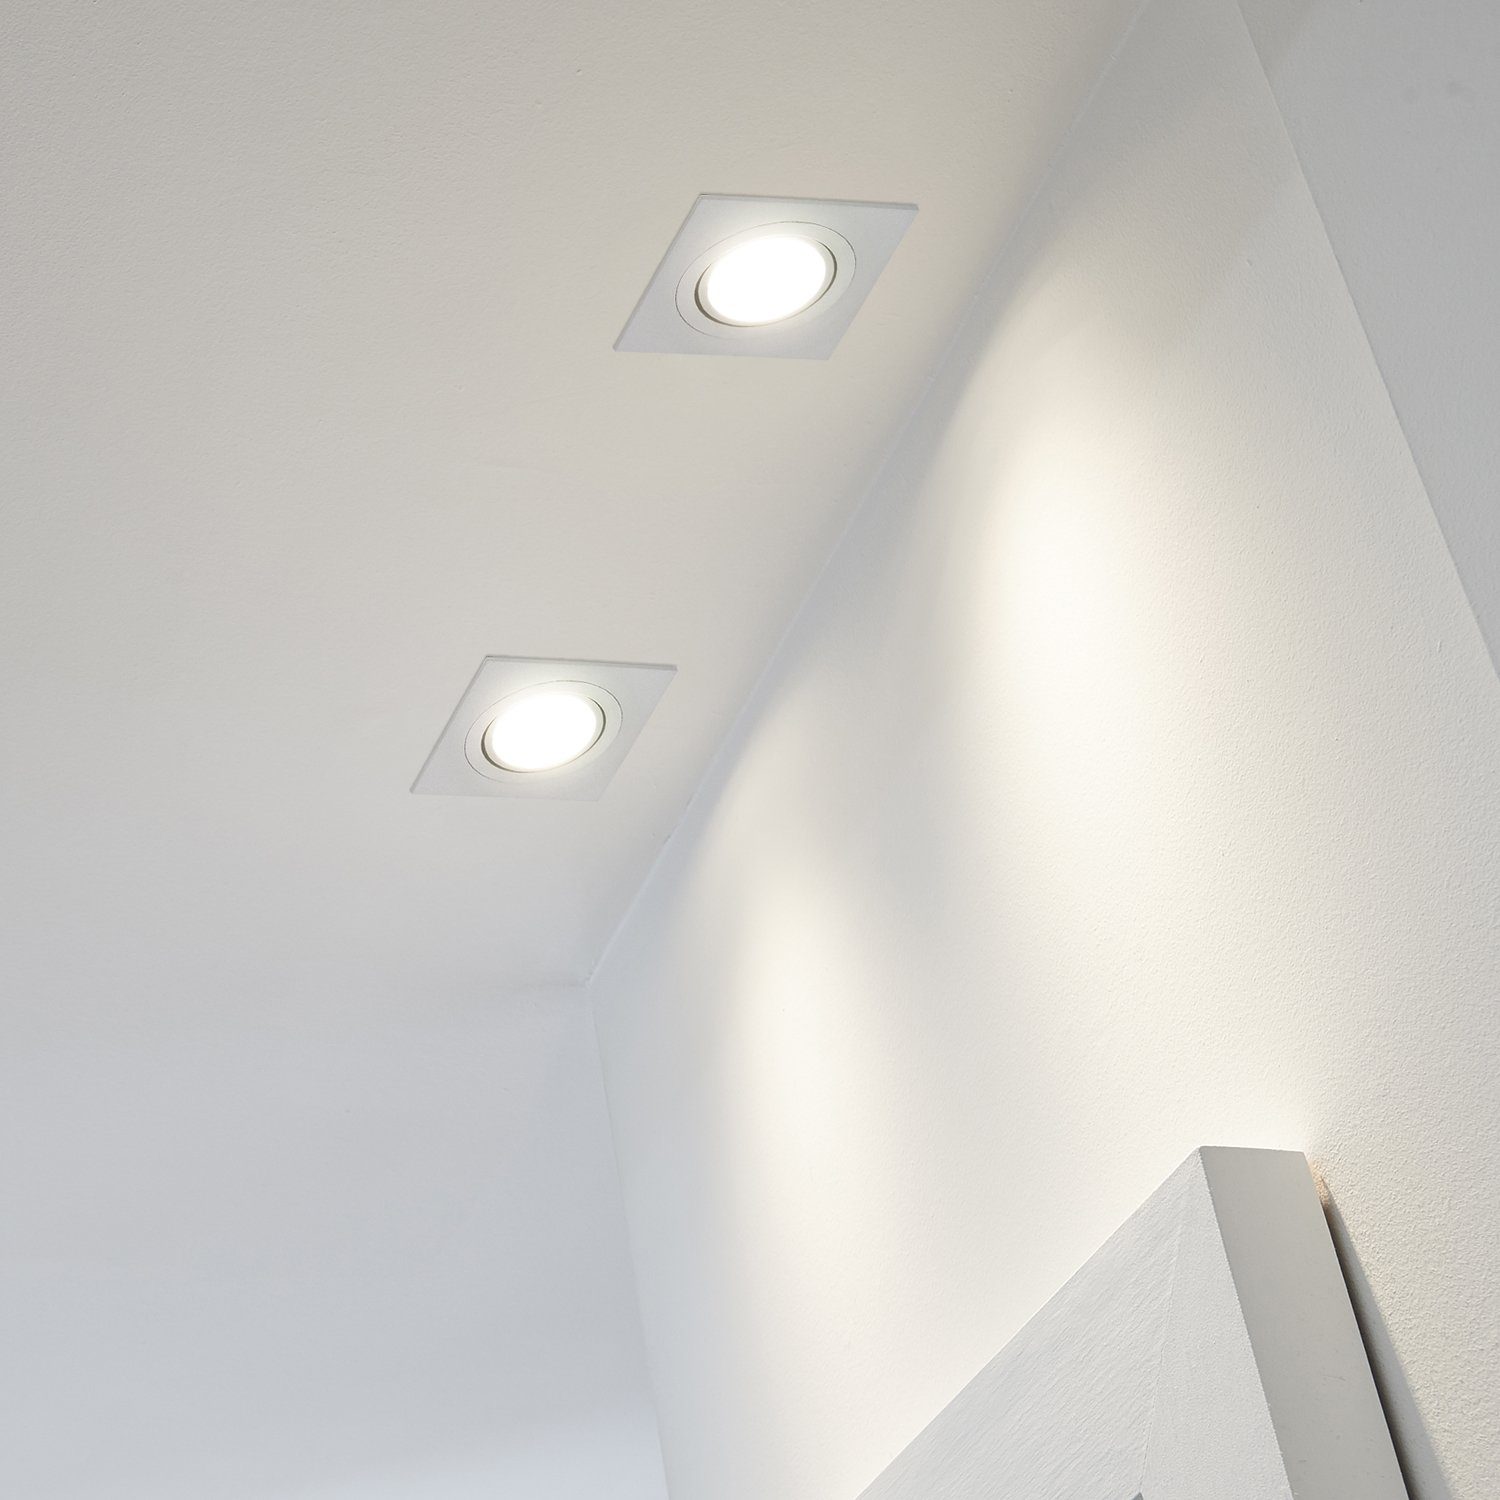 LEDANDO LED Einbaustrahler 10er LED Einbaustrahler Set Bicolor (chrom / weiß) mit LED GU10 Marken